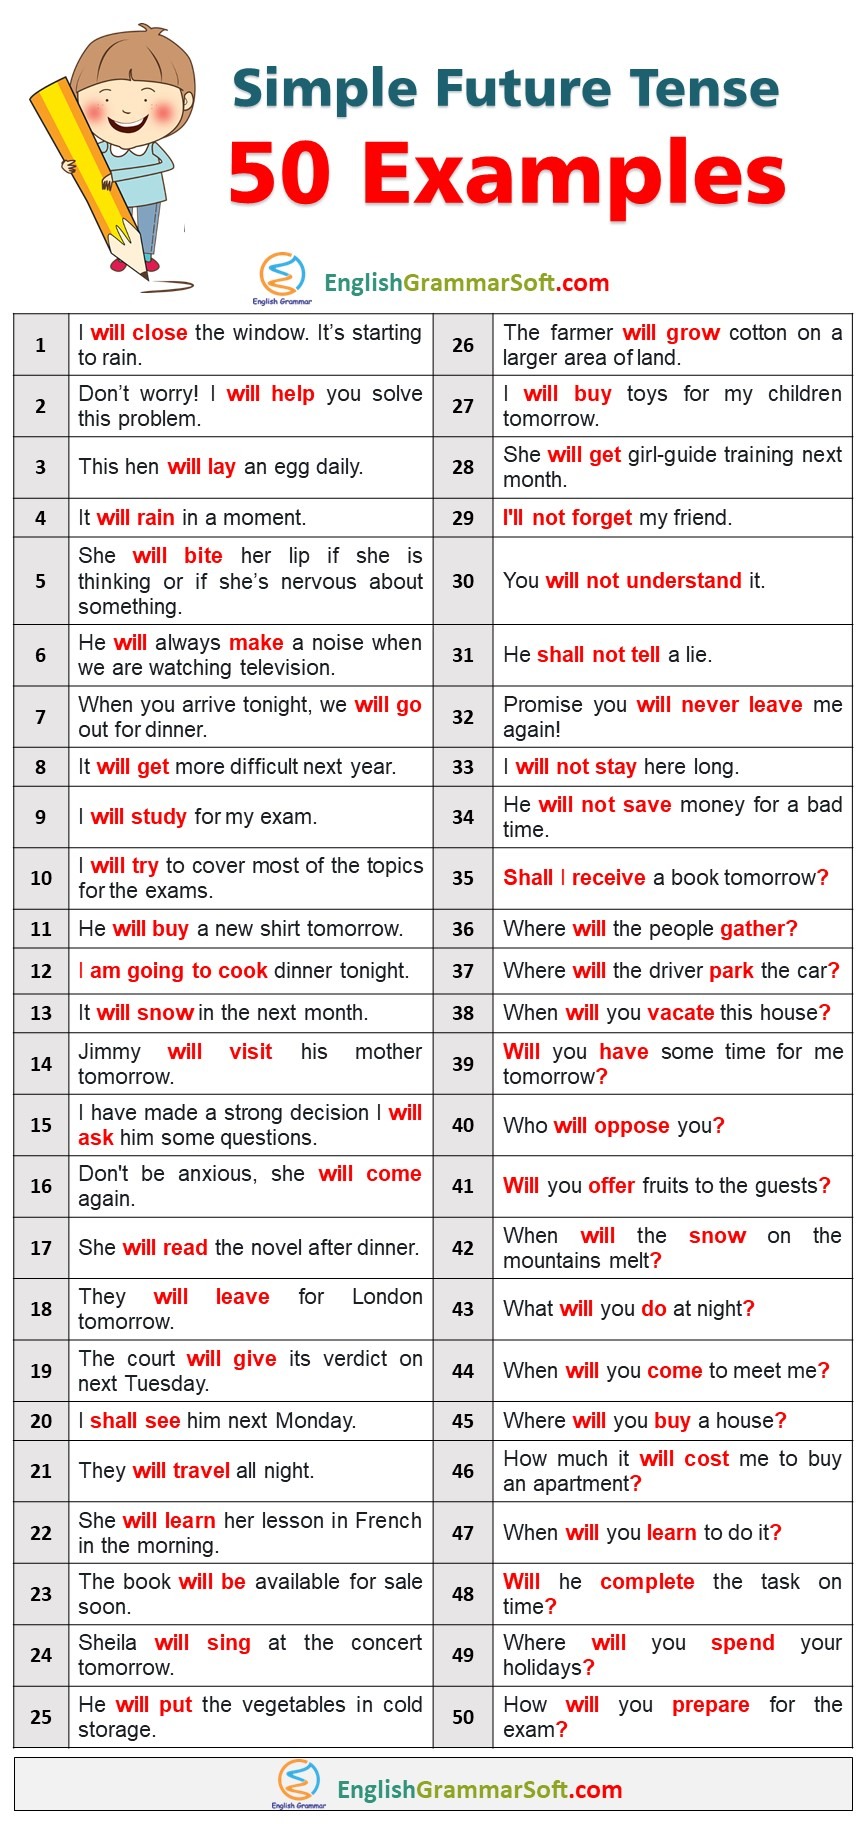 100-sentences-of-simple-present-tense-example-sentences-of-simple